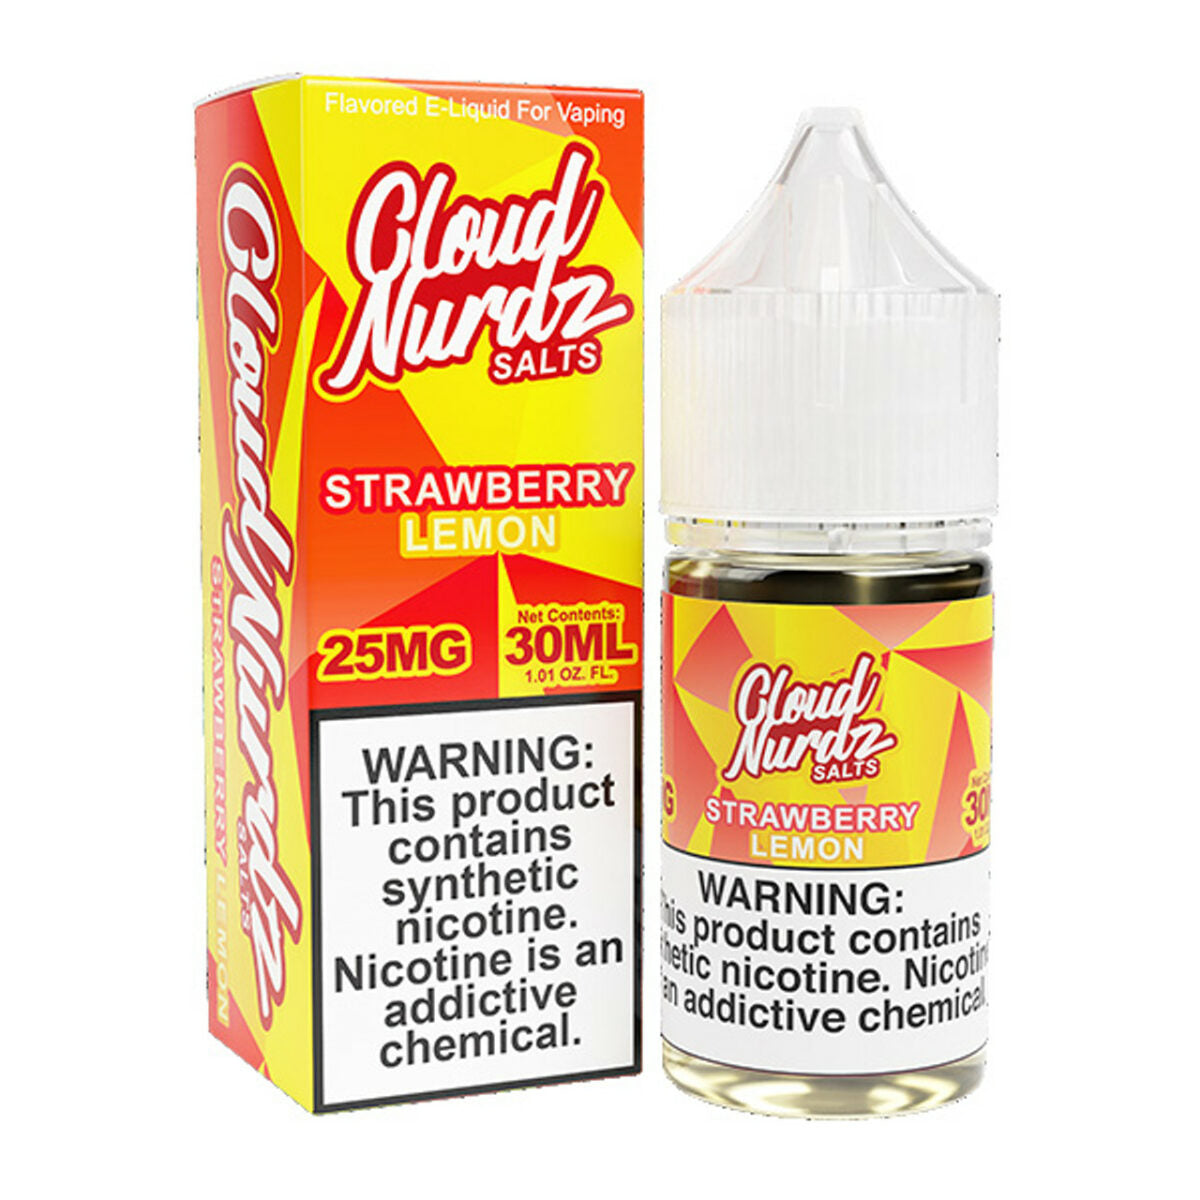 Cloud Nurdz Salt Series E-Liquid 30mL Strawberry Lemon with packaging